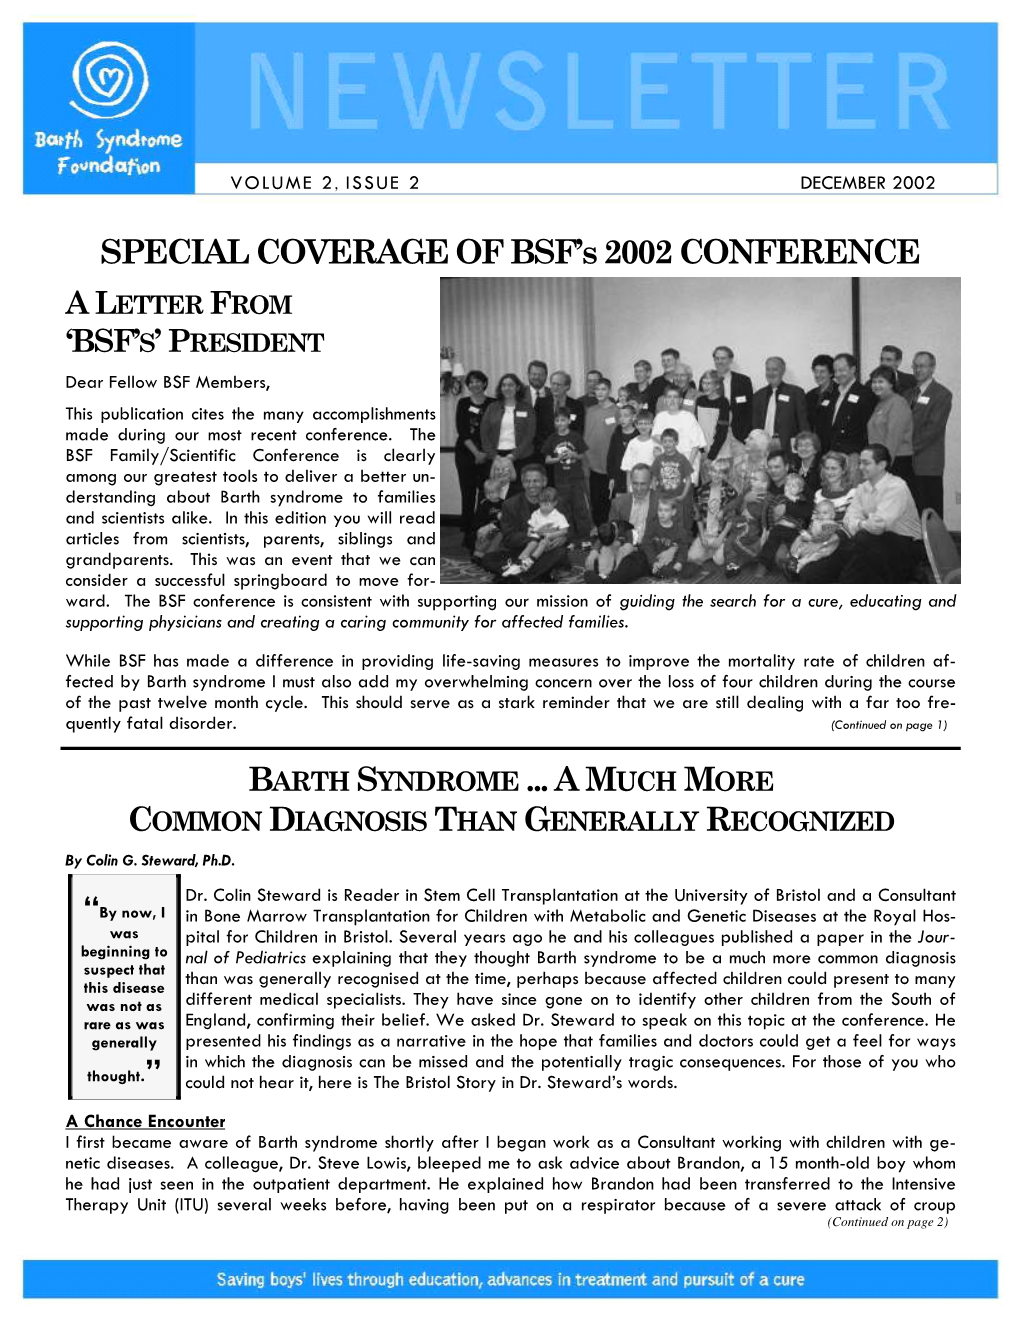 BSF Newsletter Volume 2 Issue 2 December 2002